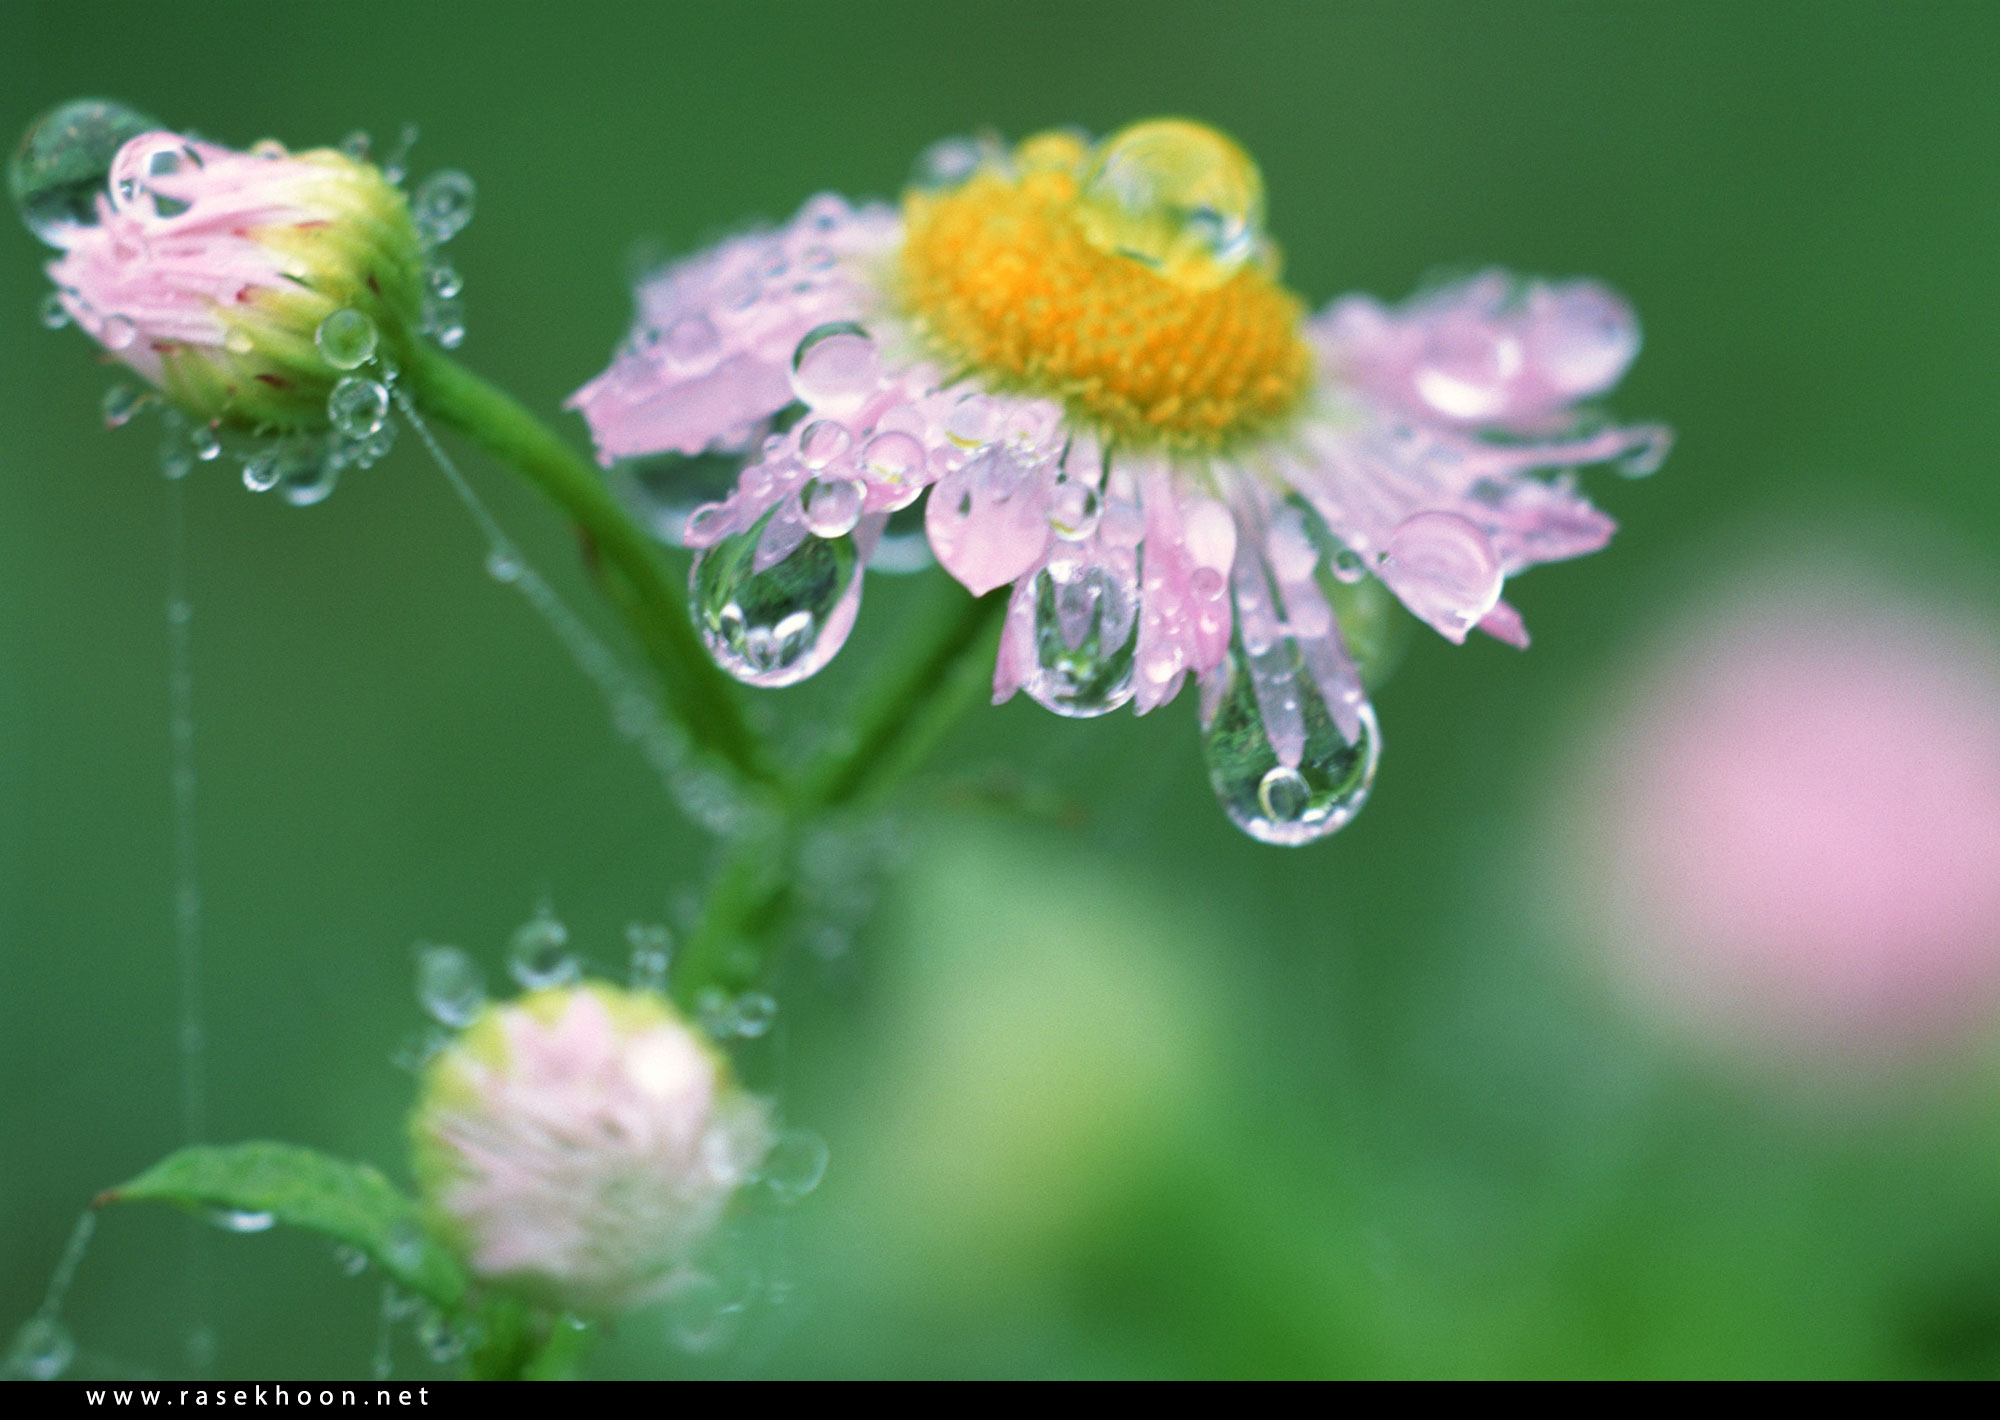 На лету роса. Утренняя роса на цветах. Цветы с капельками росы. Роса на цветах после дождя. Полевые цветы после дождя.